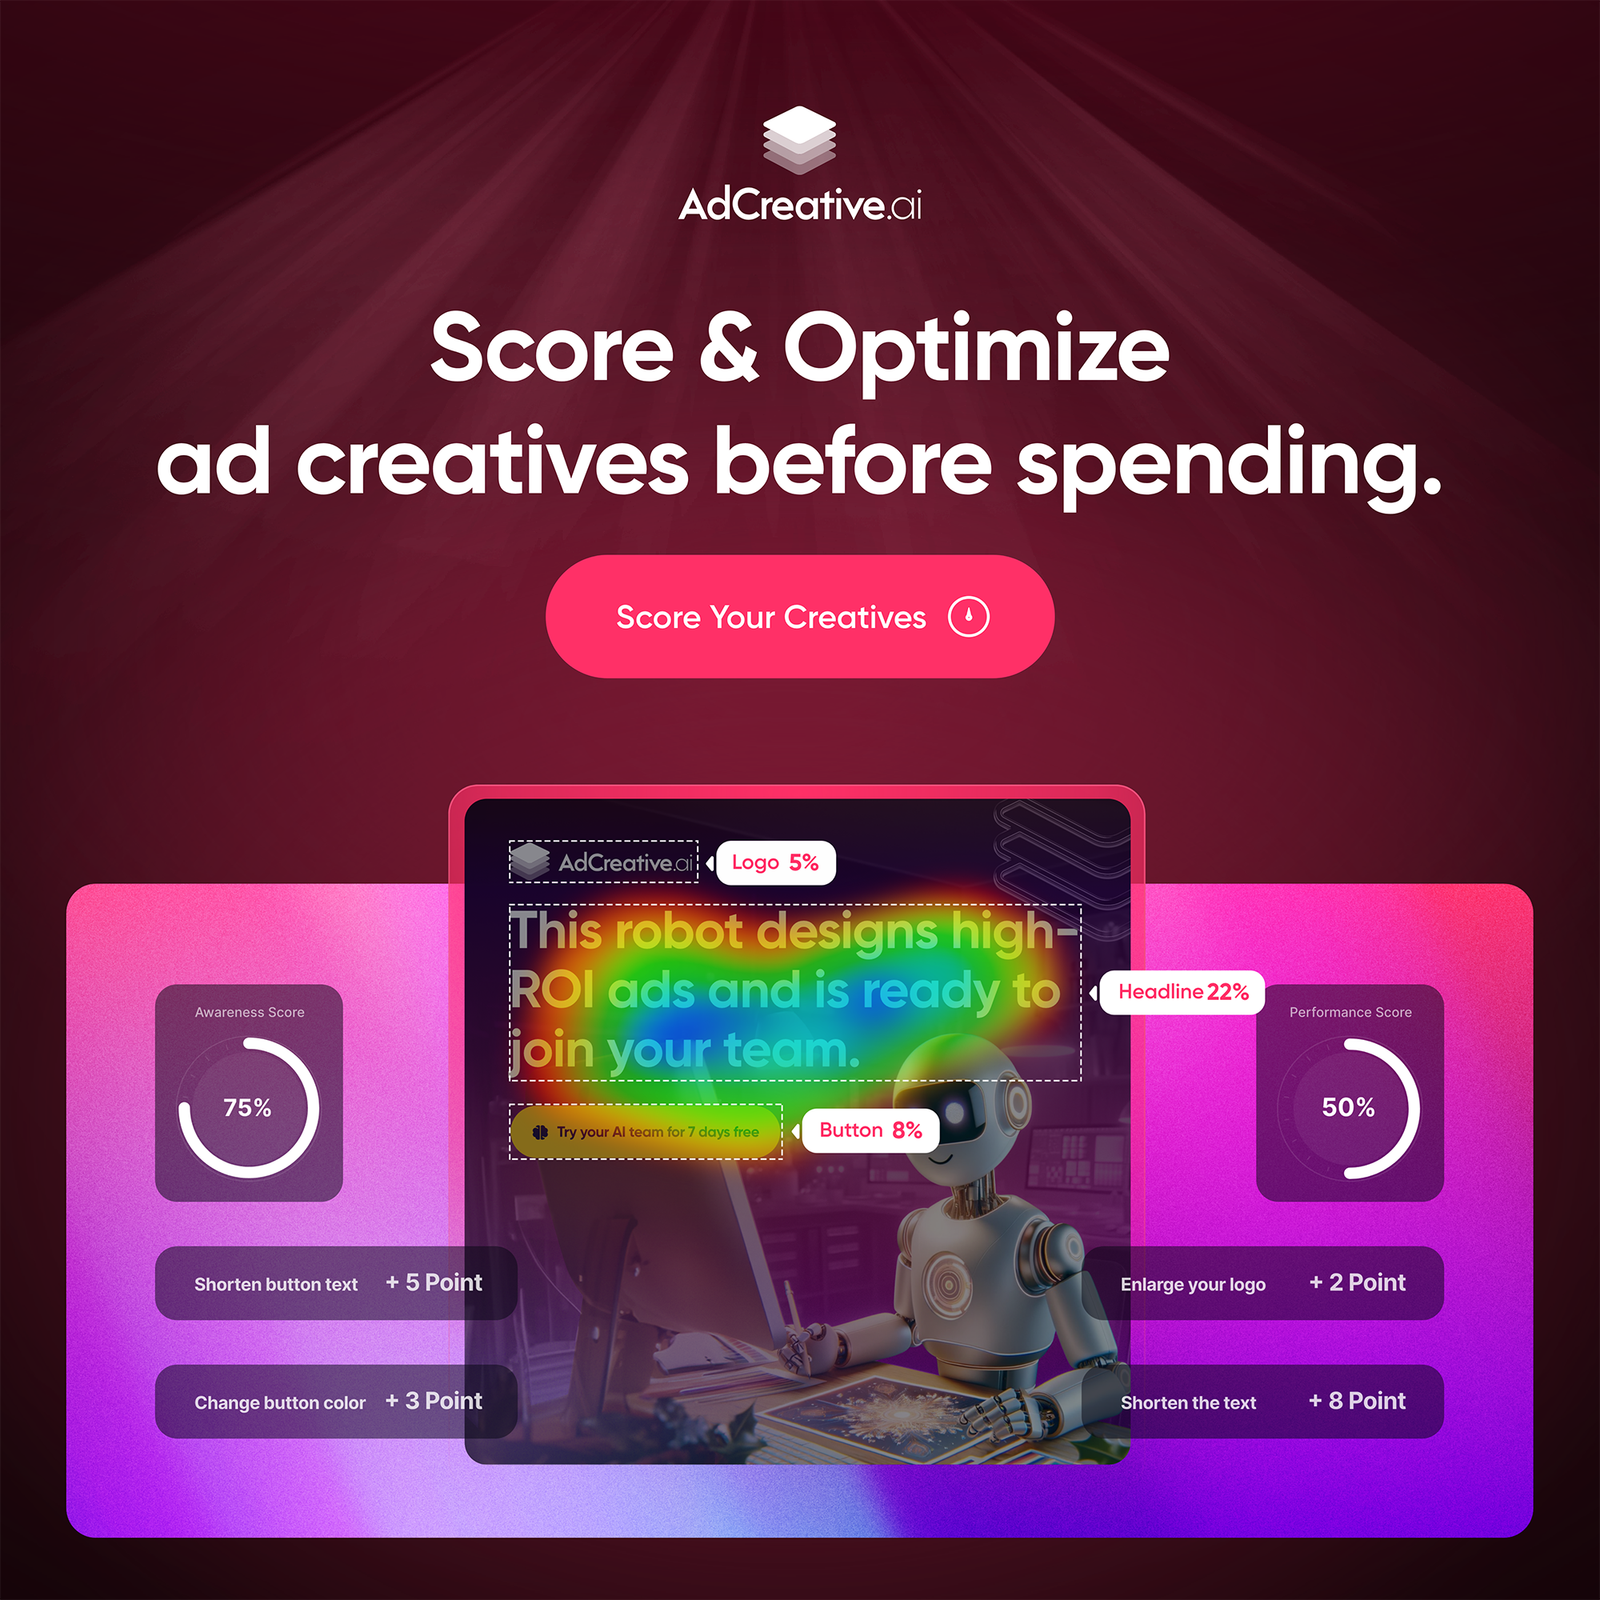 AdCreative.ai score optimize ad creatives before spending